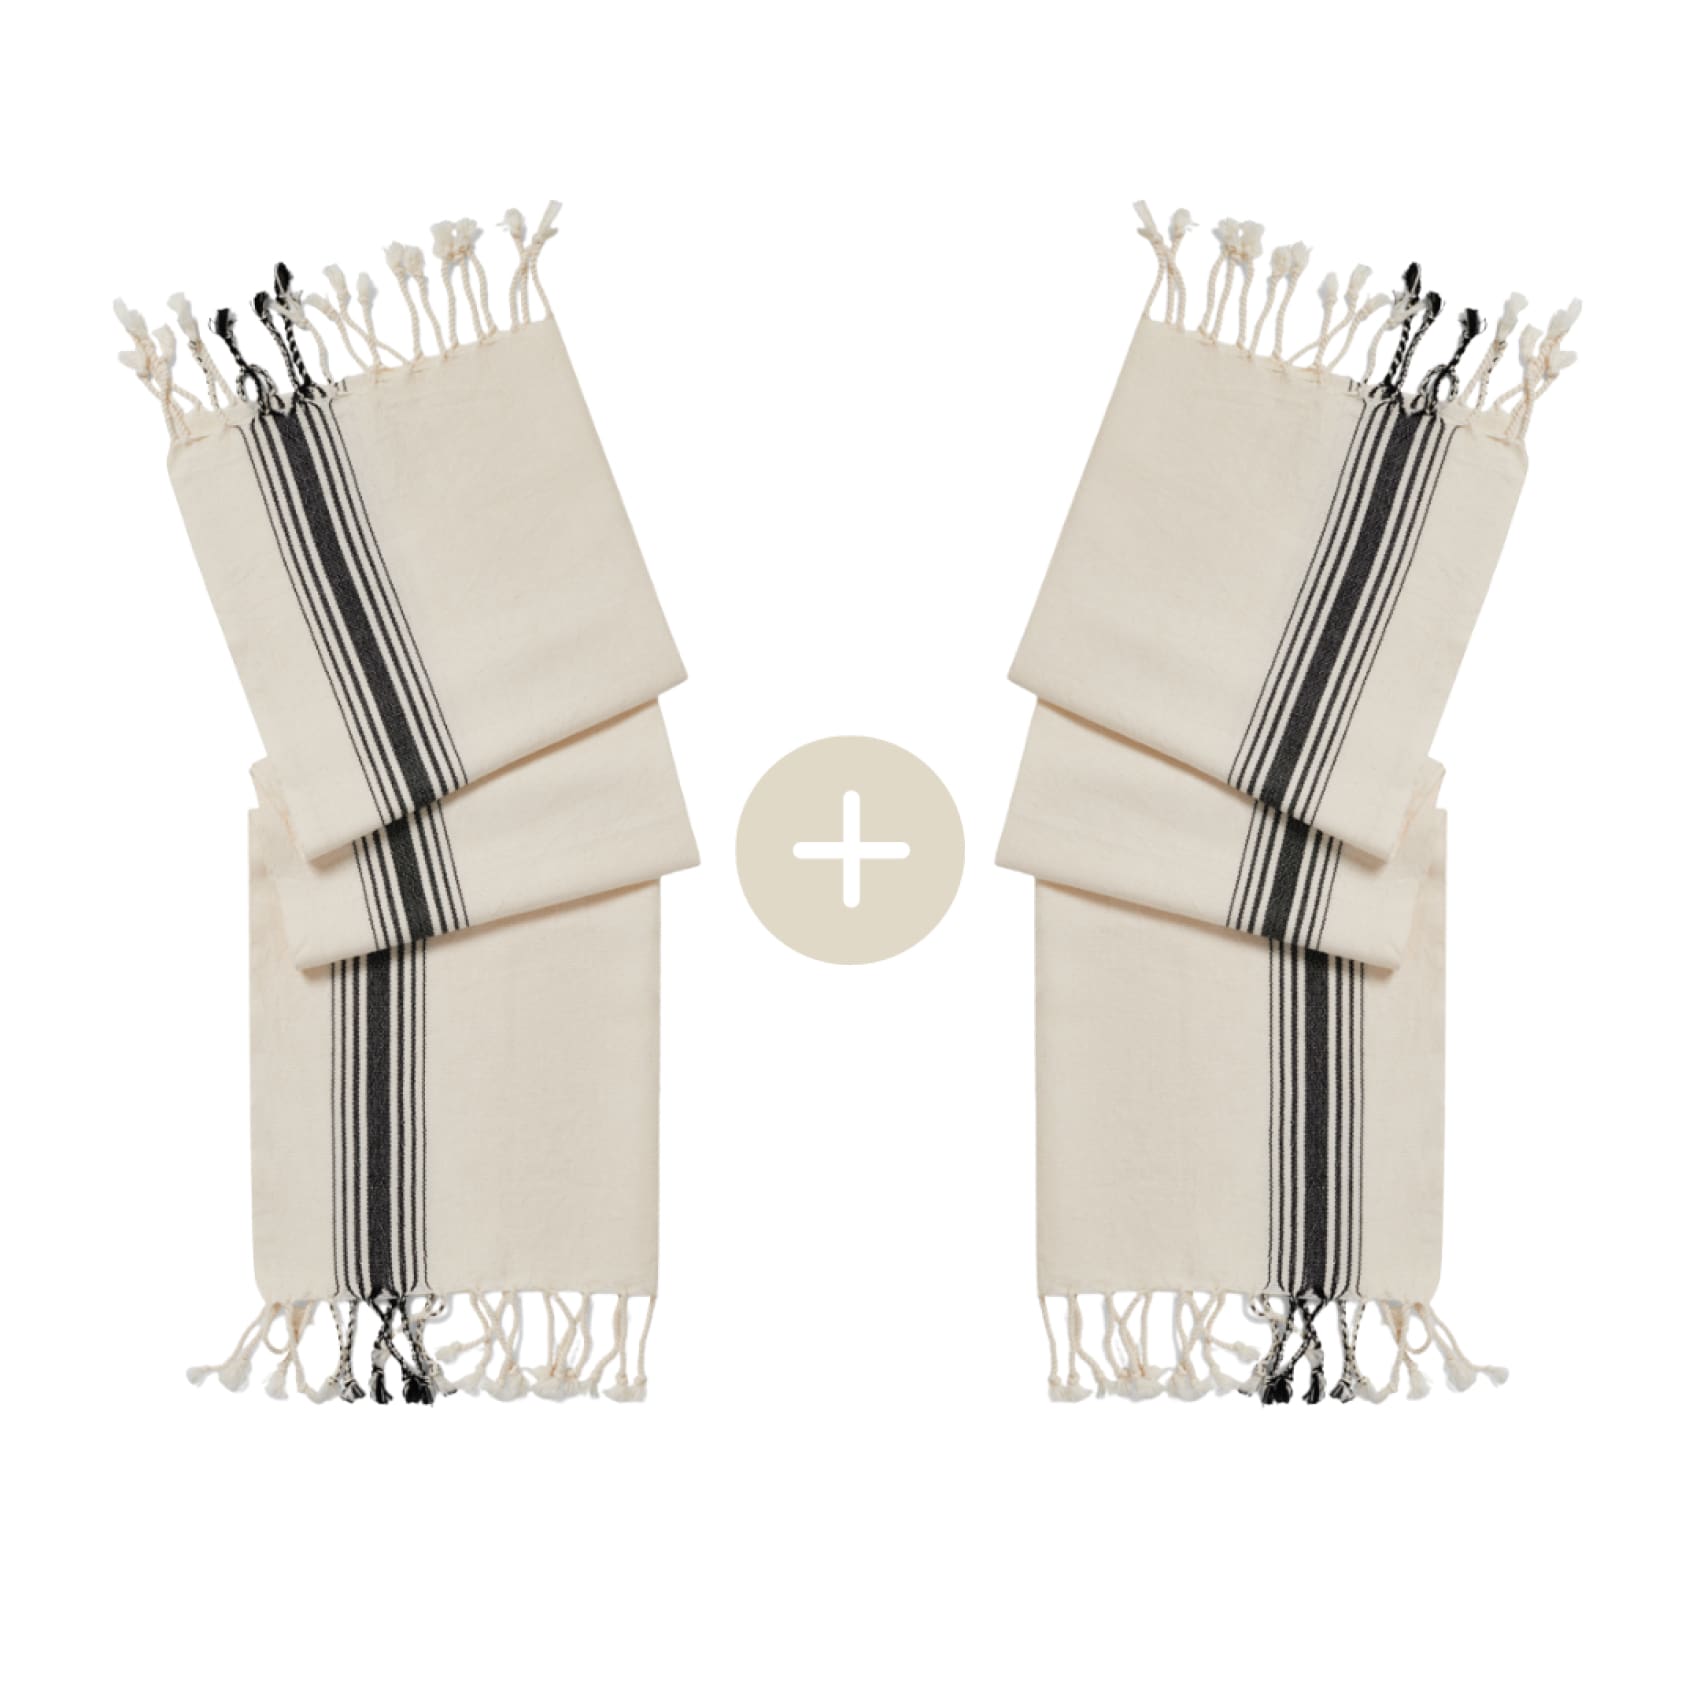 bergama-cotton-hand-towel-set-save-5-bundle-bundles-duo-luks-linen-shorts-fashion-accessory-531_119ba0cf-1feb-4c99-9aad-291582ffebd3.jpg